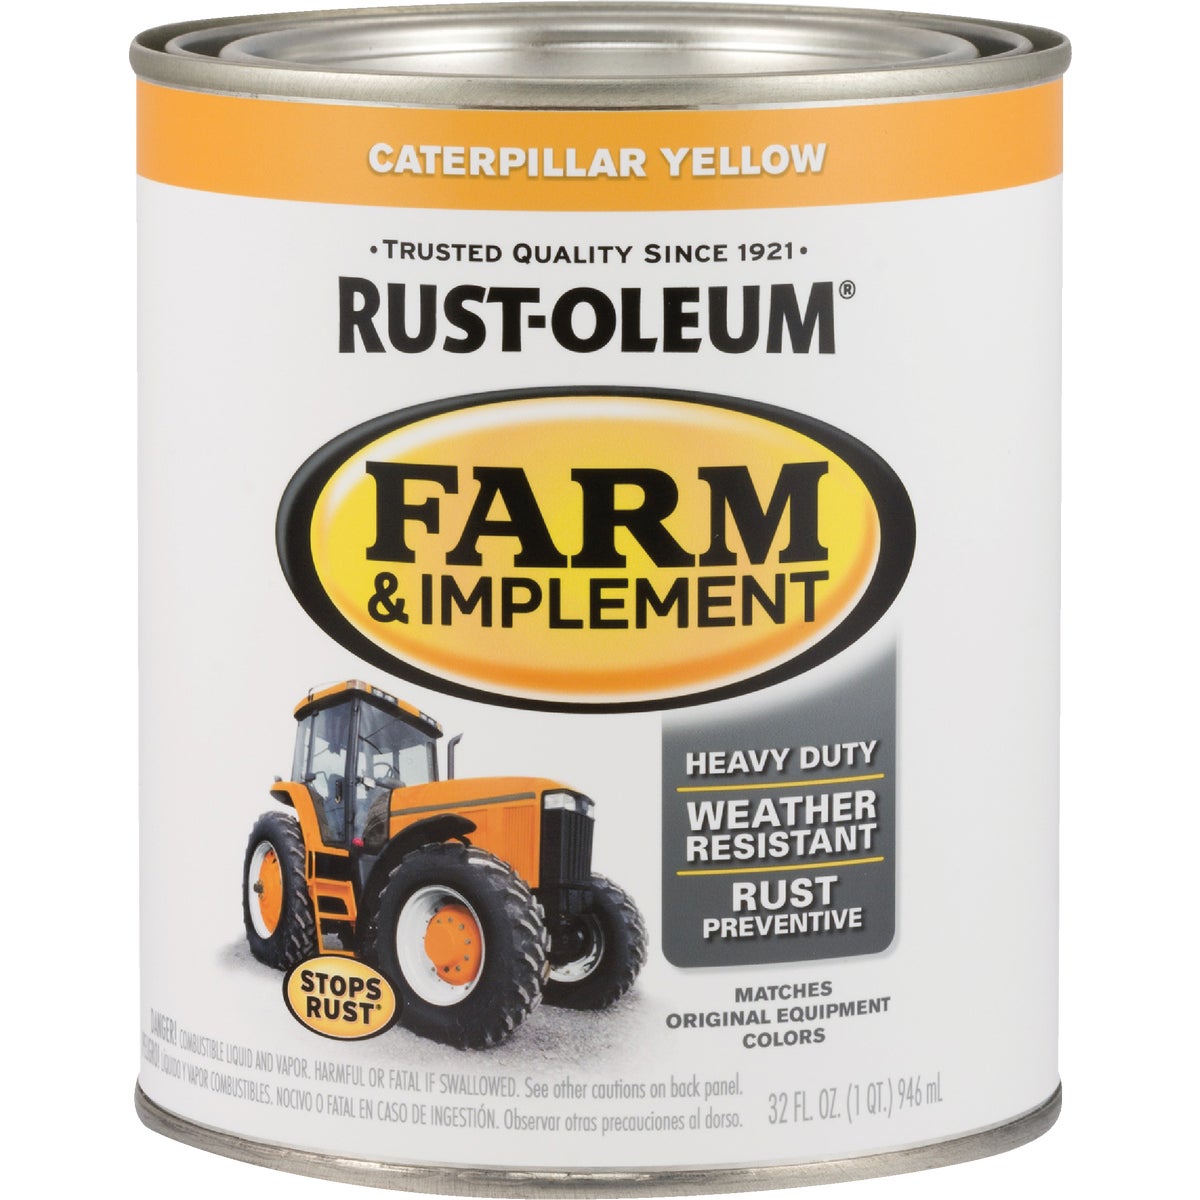 Rust-Oleum 1 Quart Caterpillar Yellow Gloss Farm & Implement Enamel